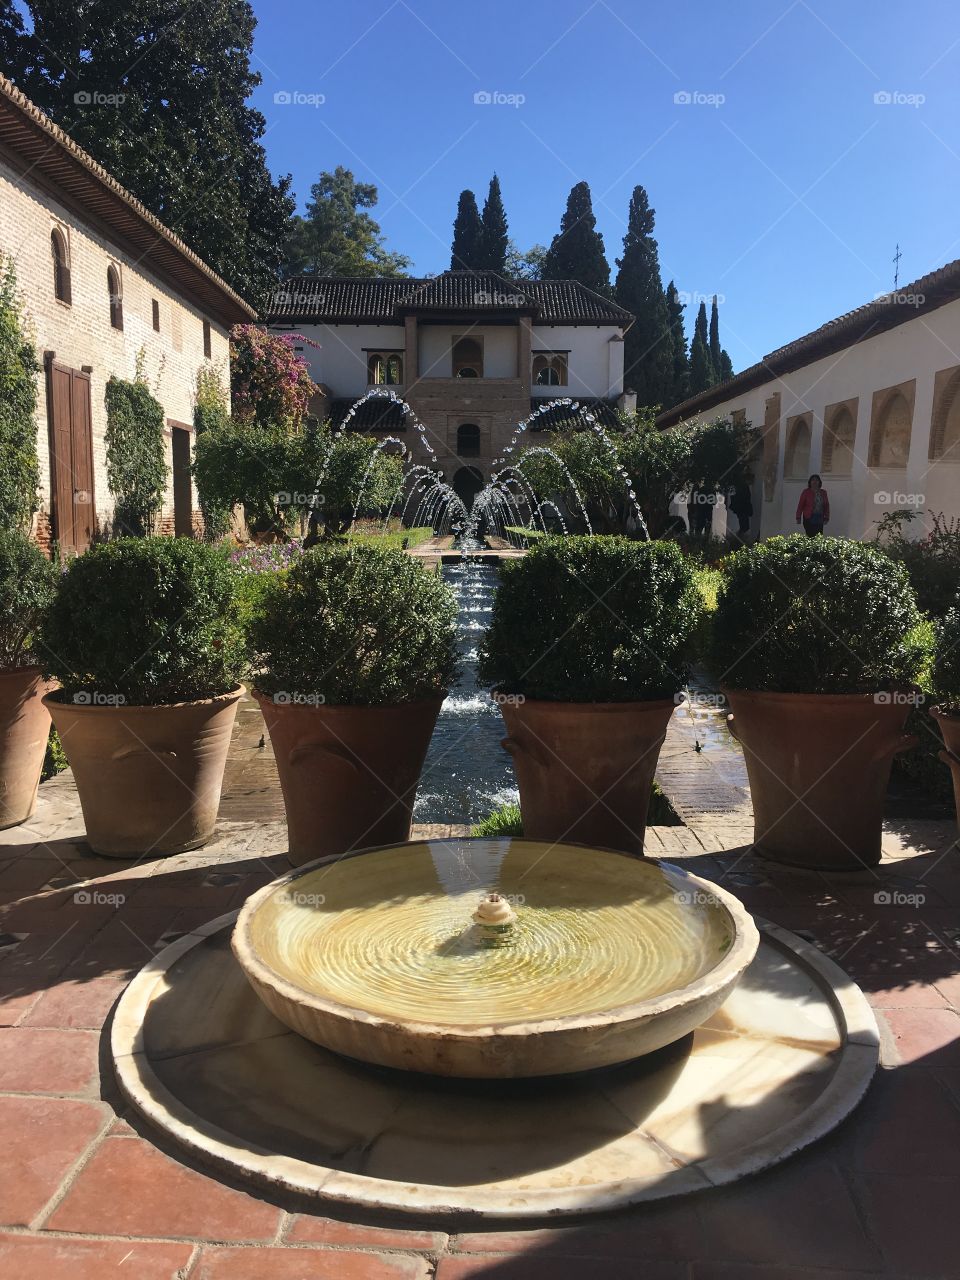 Fountains in a Spanish garden 